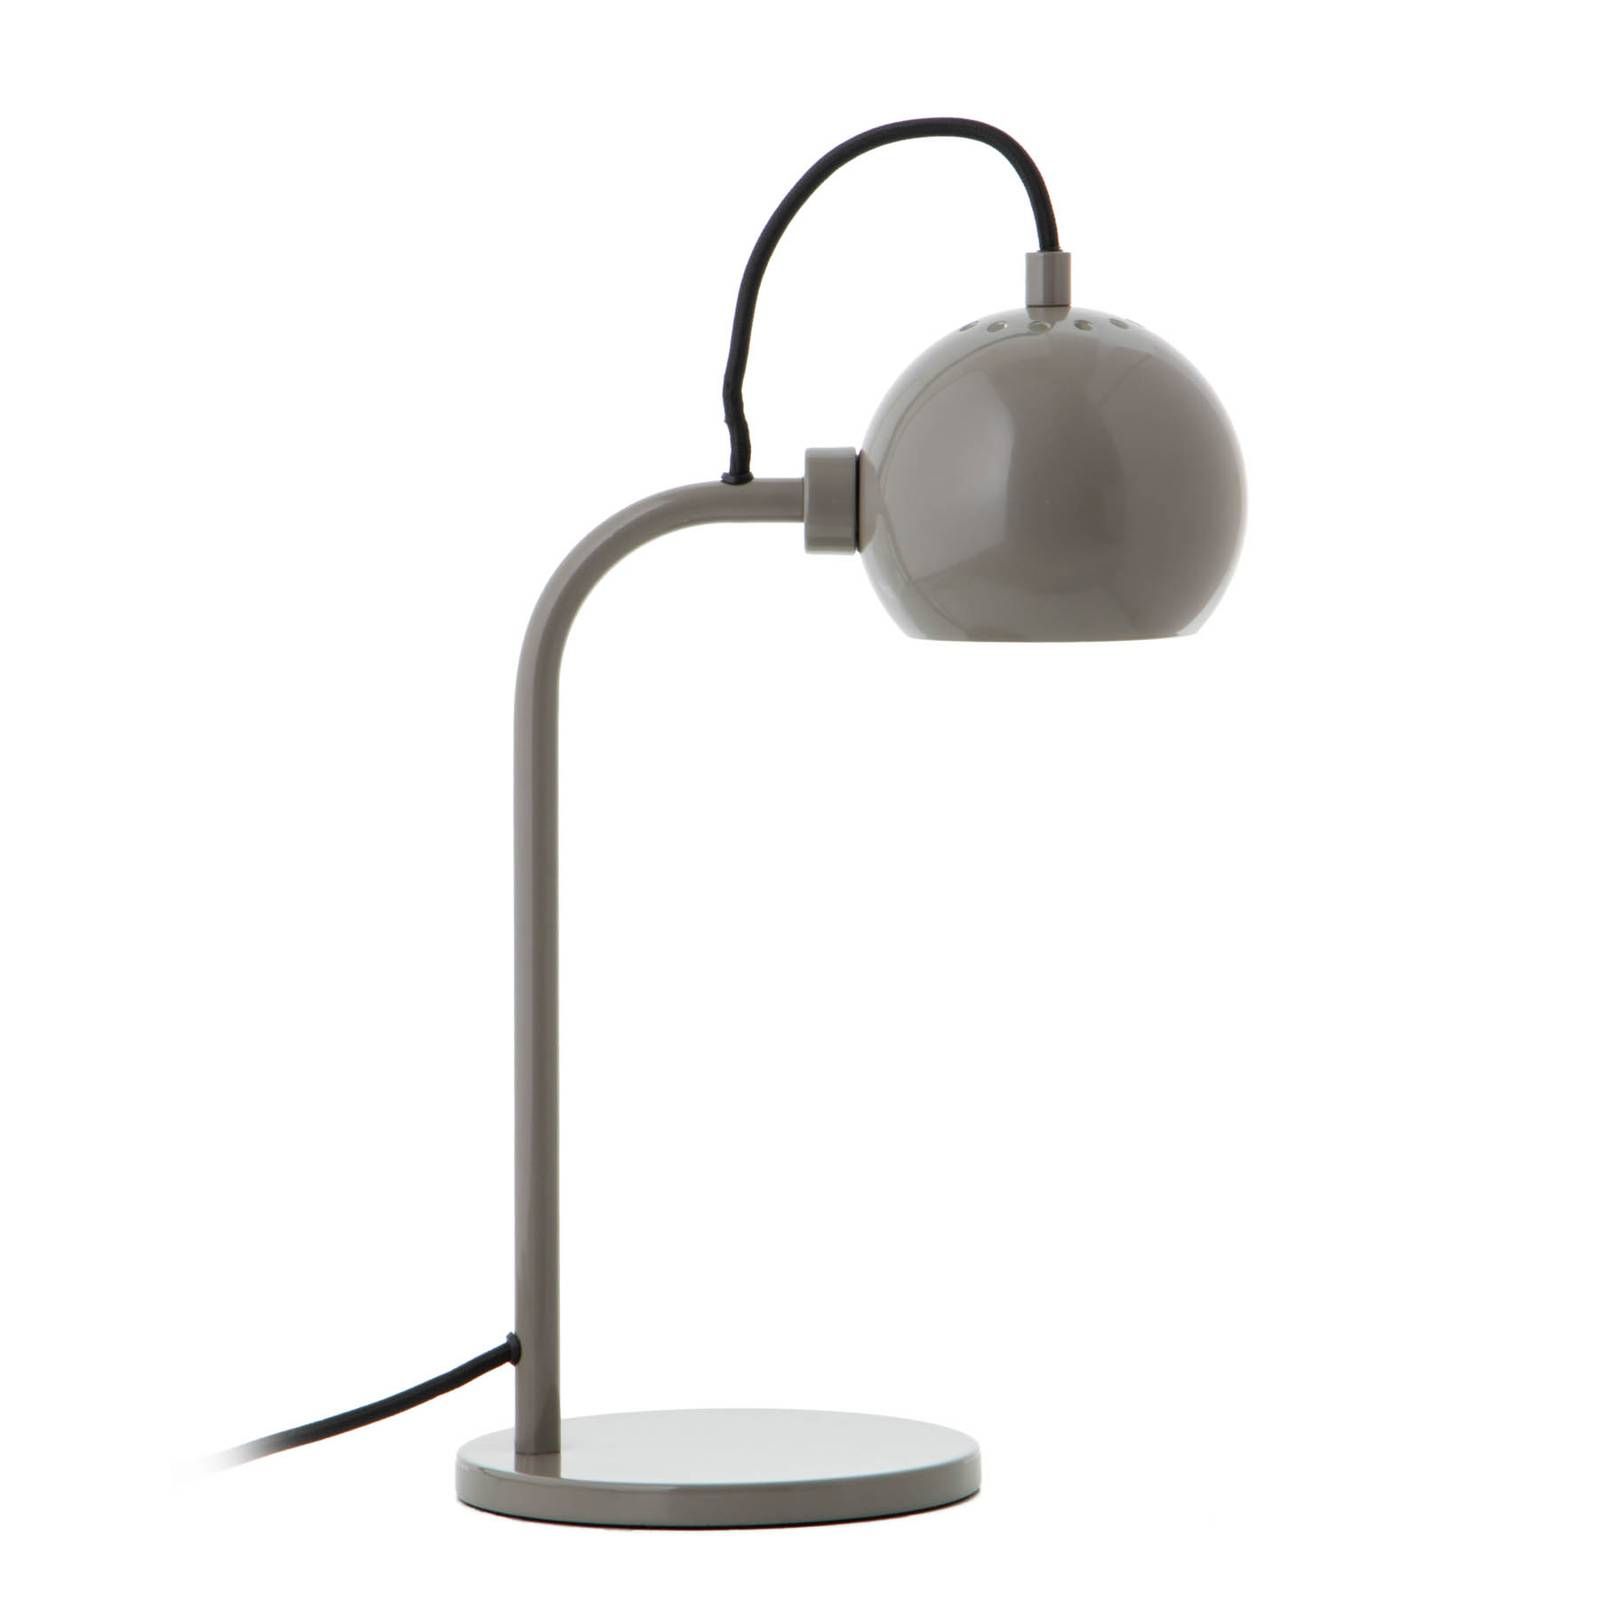 FRANDSEN Ball Single stolová lampa, tmavosivá, Obývacia izba / jedáleň, kov, E14, 25W, L: 16 cm, K: 37cm